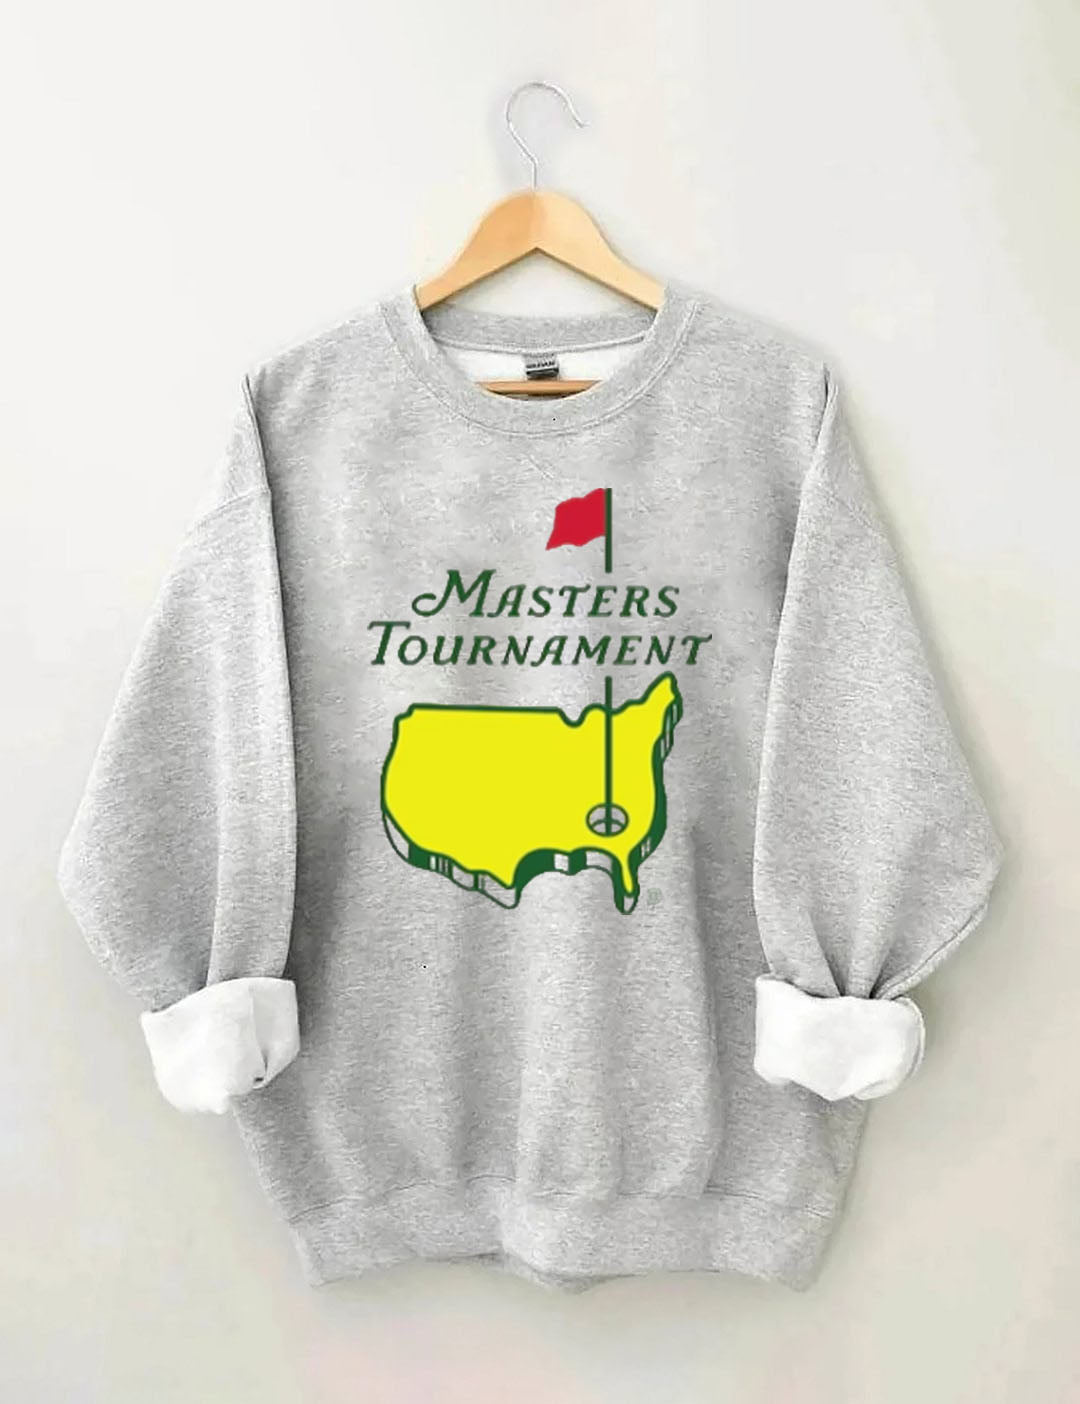 Golf Master Tournament sweatshirt